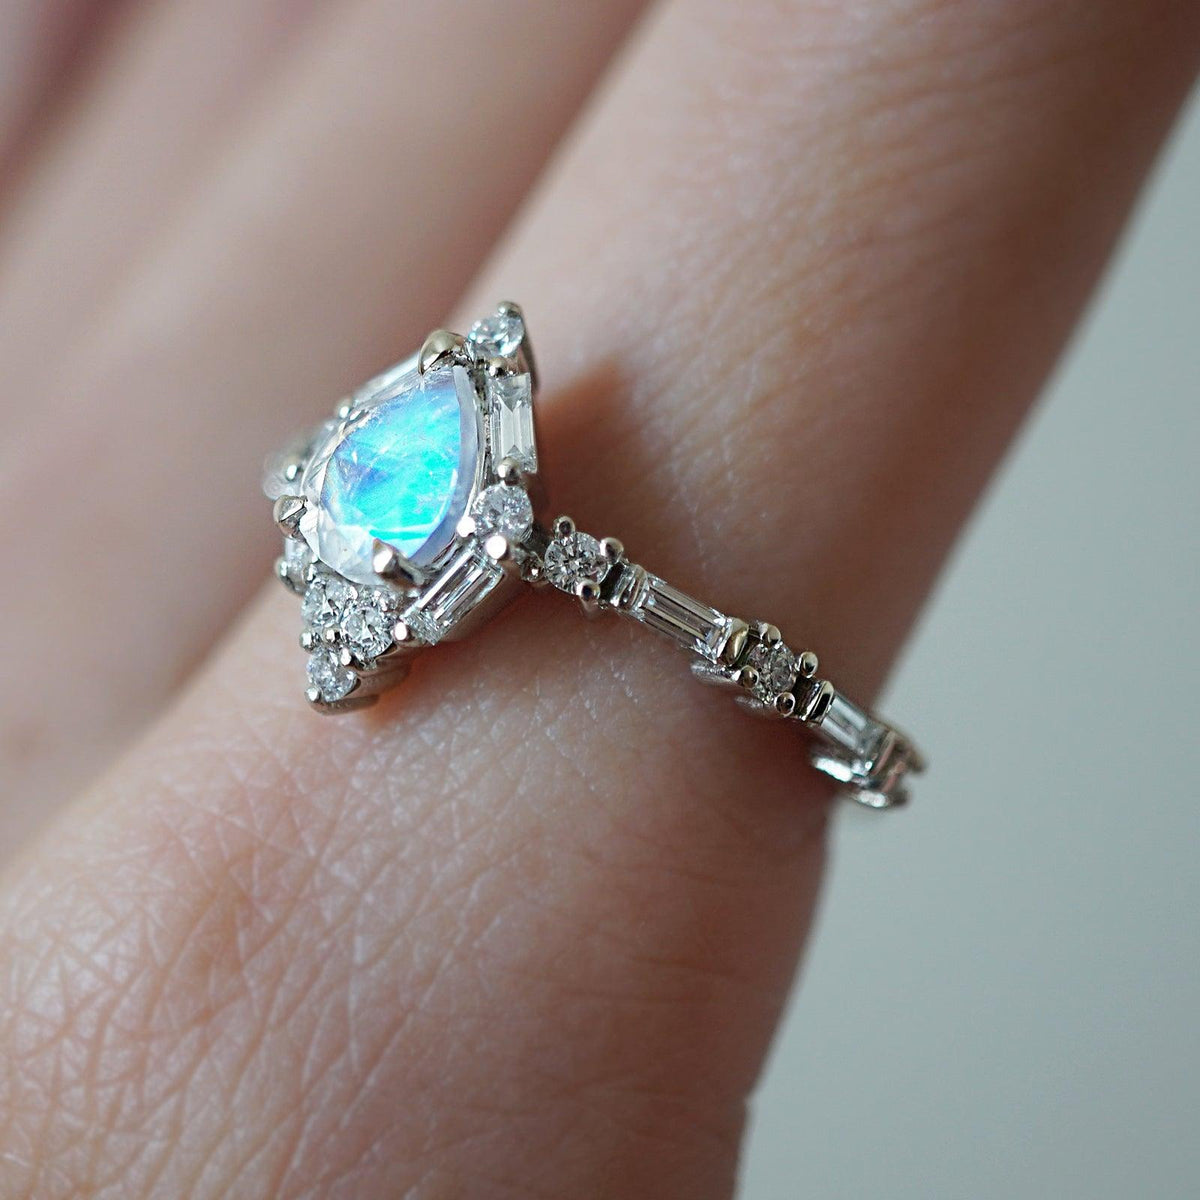 Selene Moonstone Diamond Ring in 14K and 18K Gold - Tippy Taste Jewelry